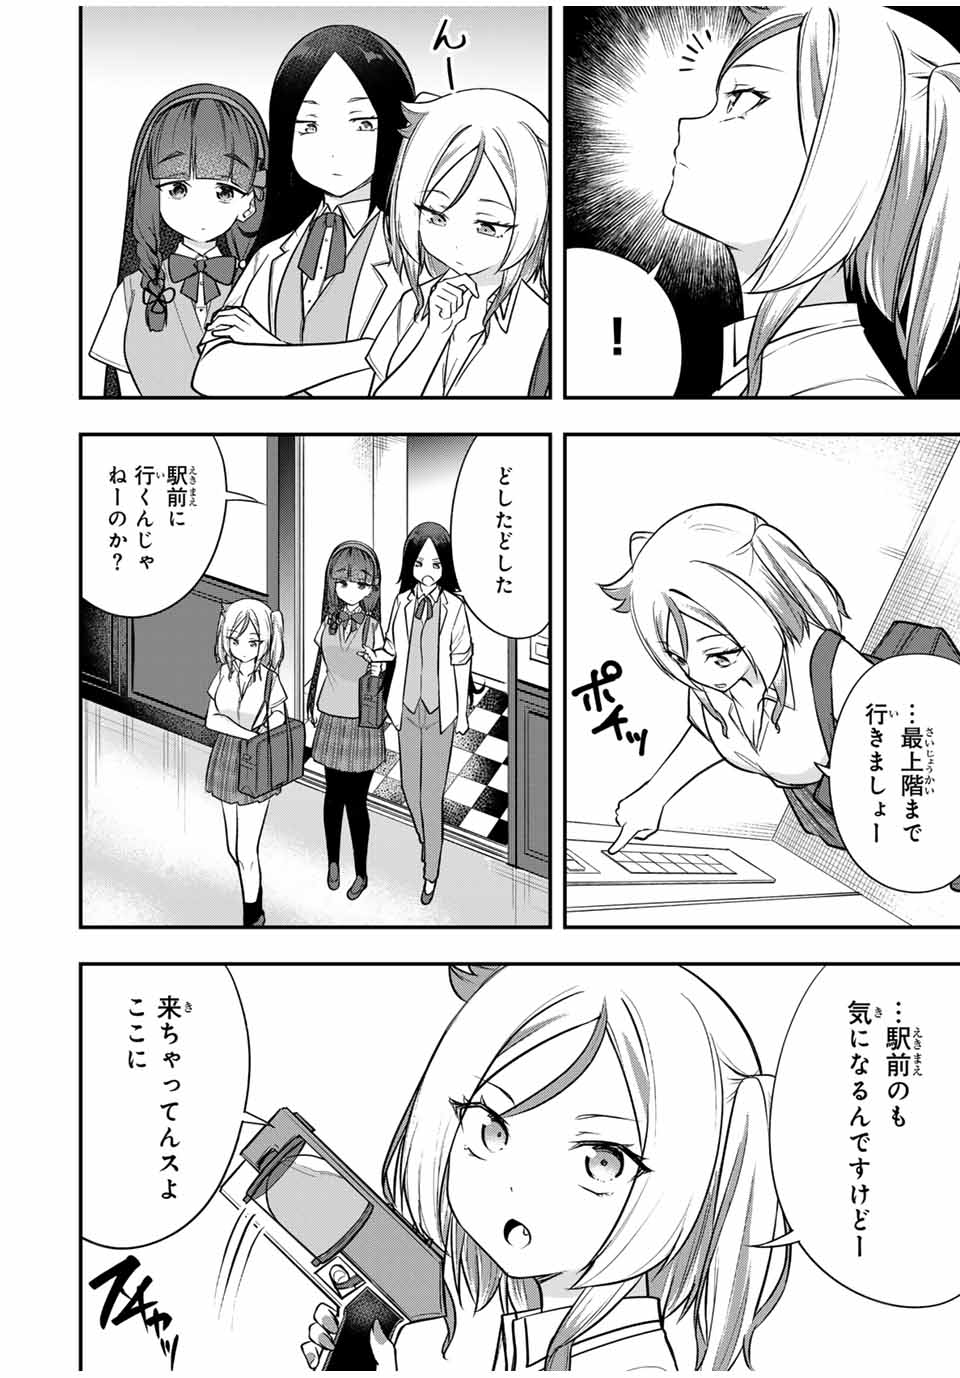 Heroine wa xx Okasegitai - Chapter 13 - Page 10